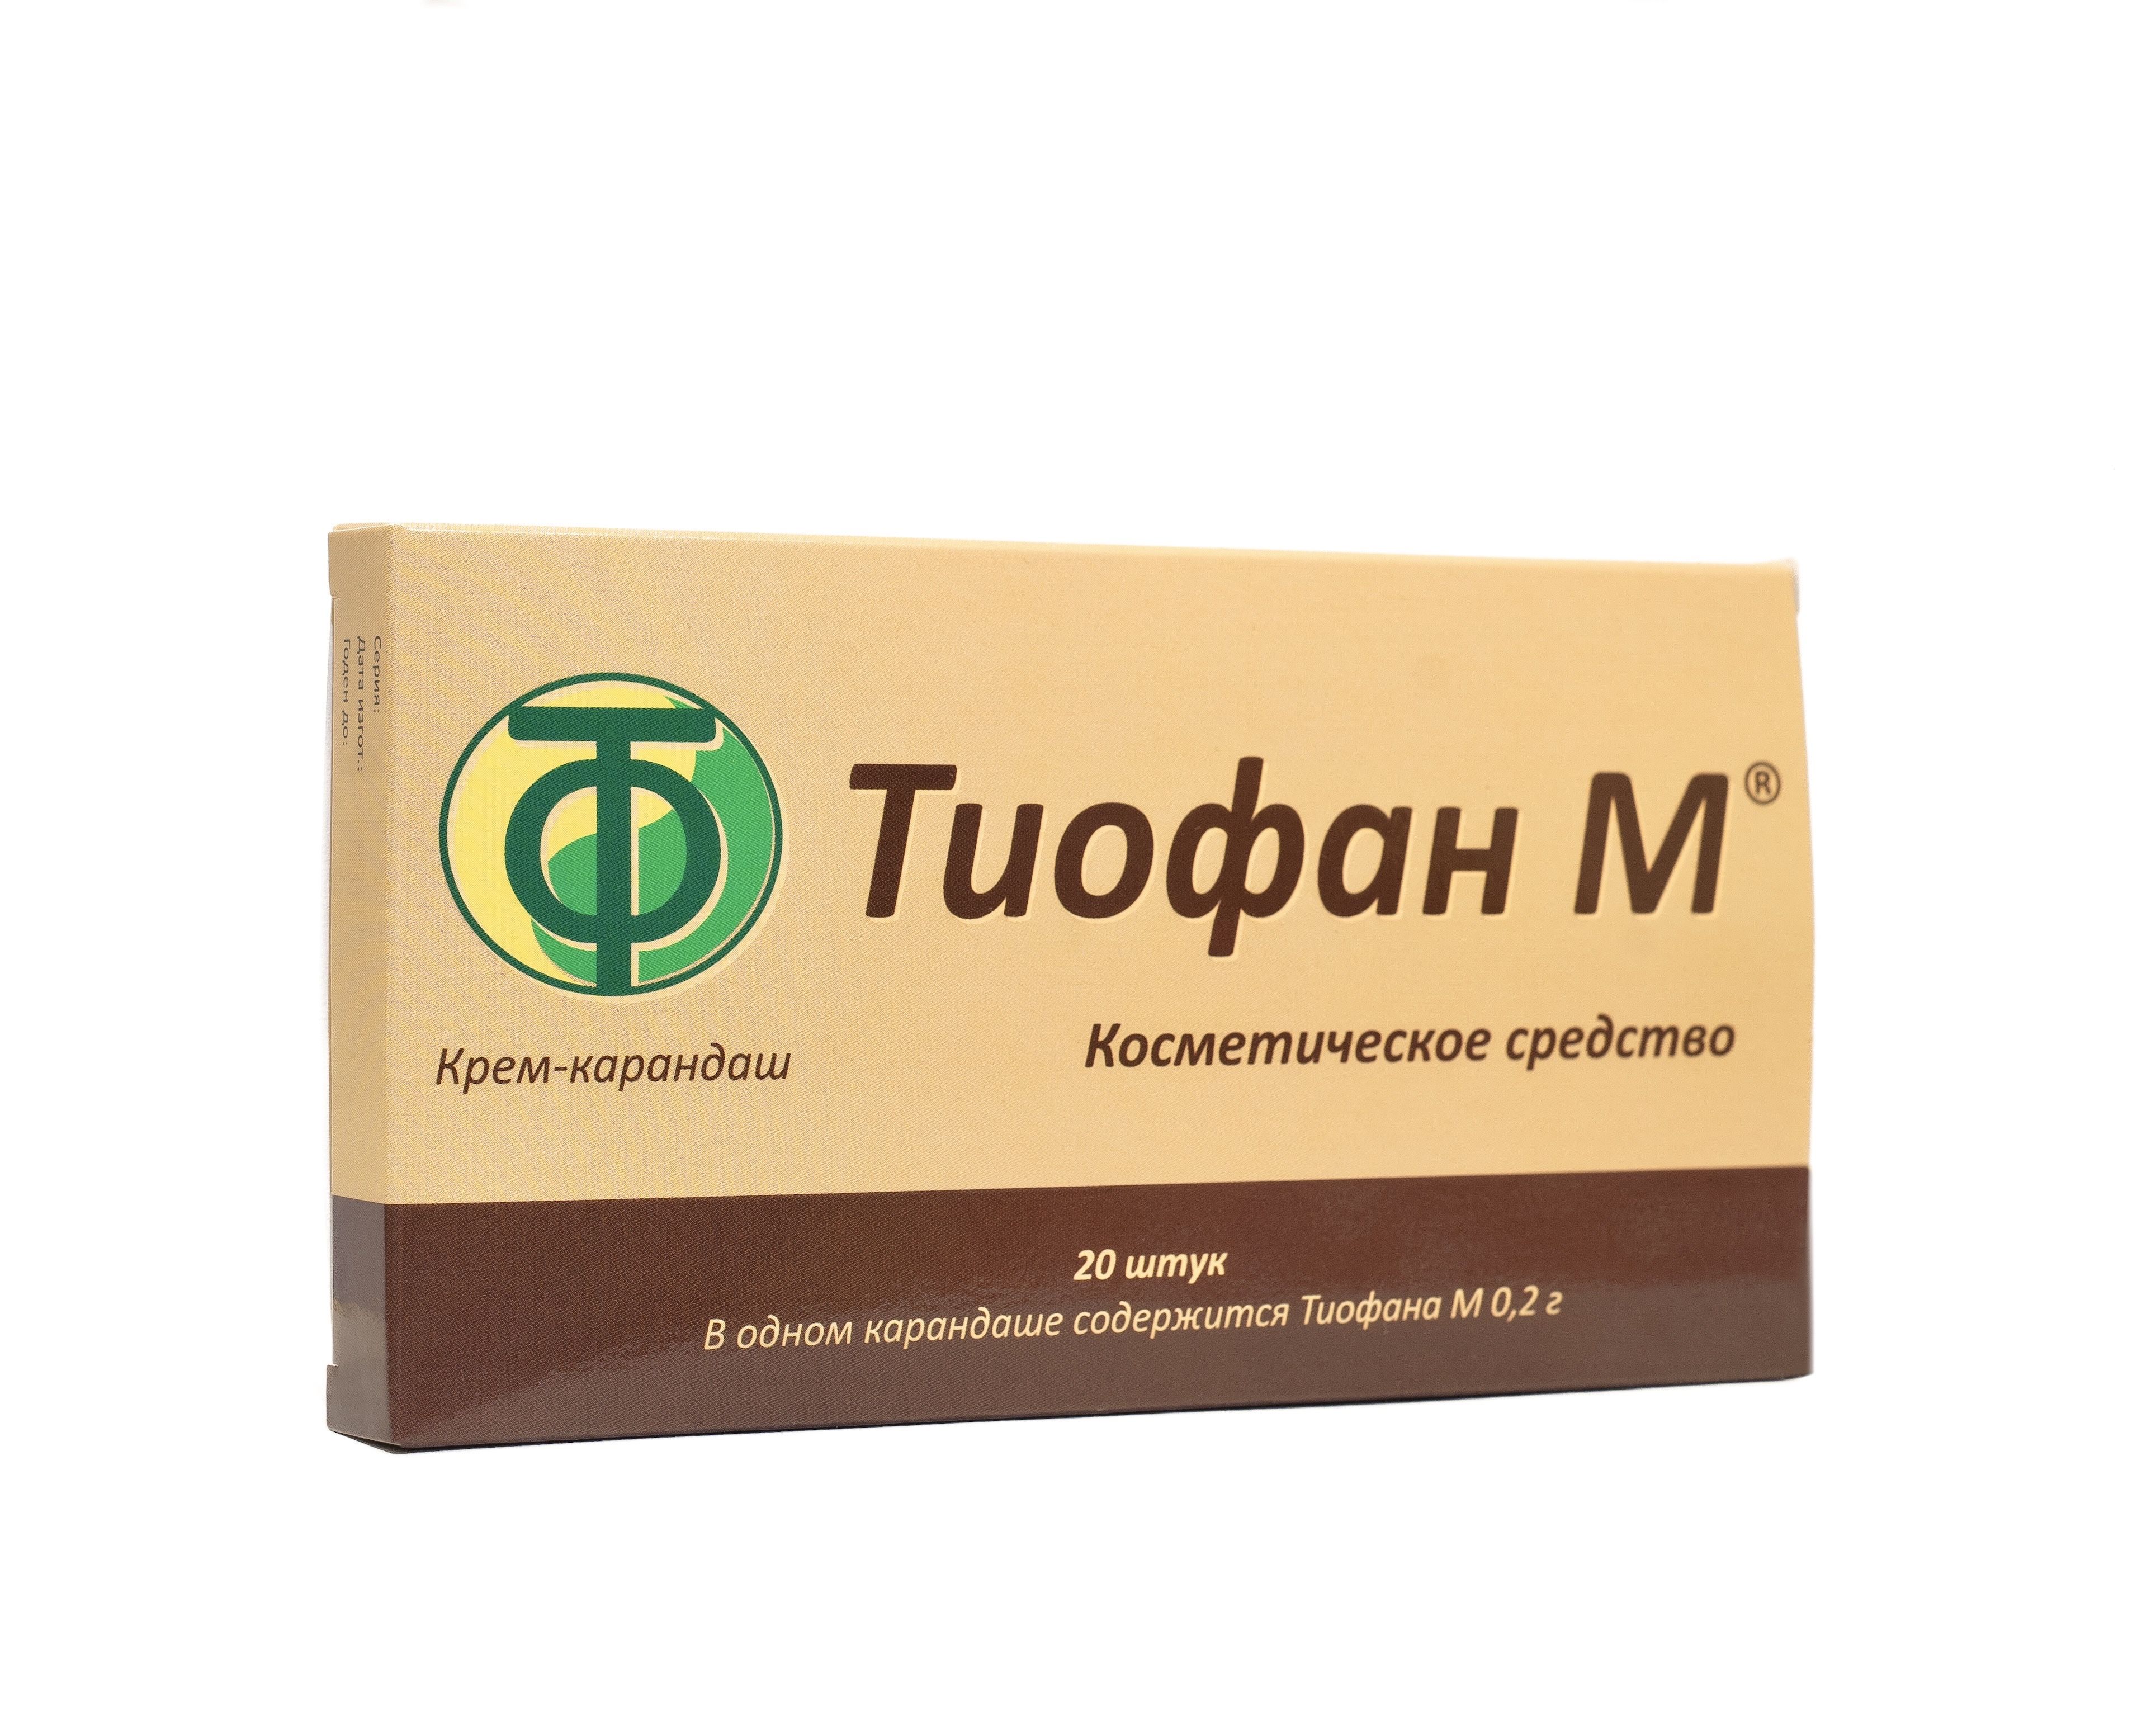 Тиофан производитель новосибирск. Тиофан лекарство. Тиофан м 200мг. Гем крем-карандаш инструкция. Тиофан купить в Новосибирске у производителя Кольцово цена.